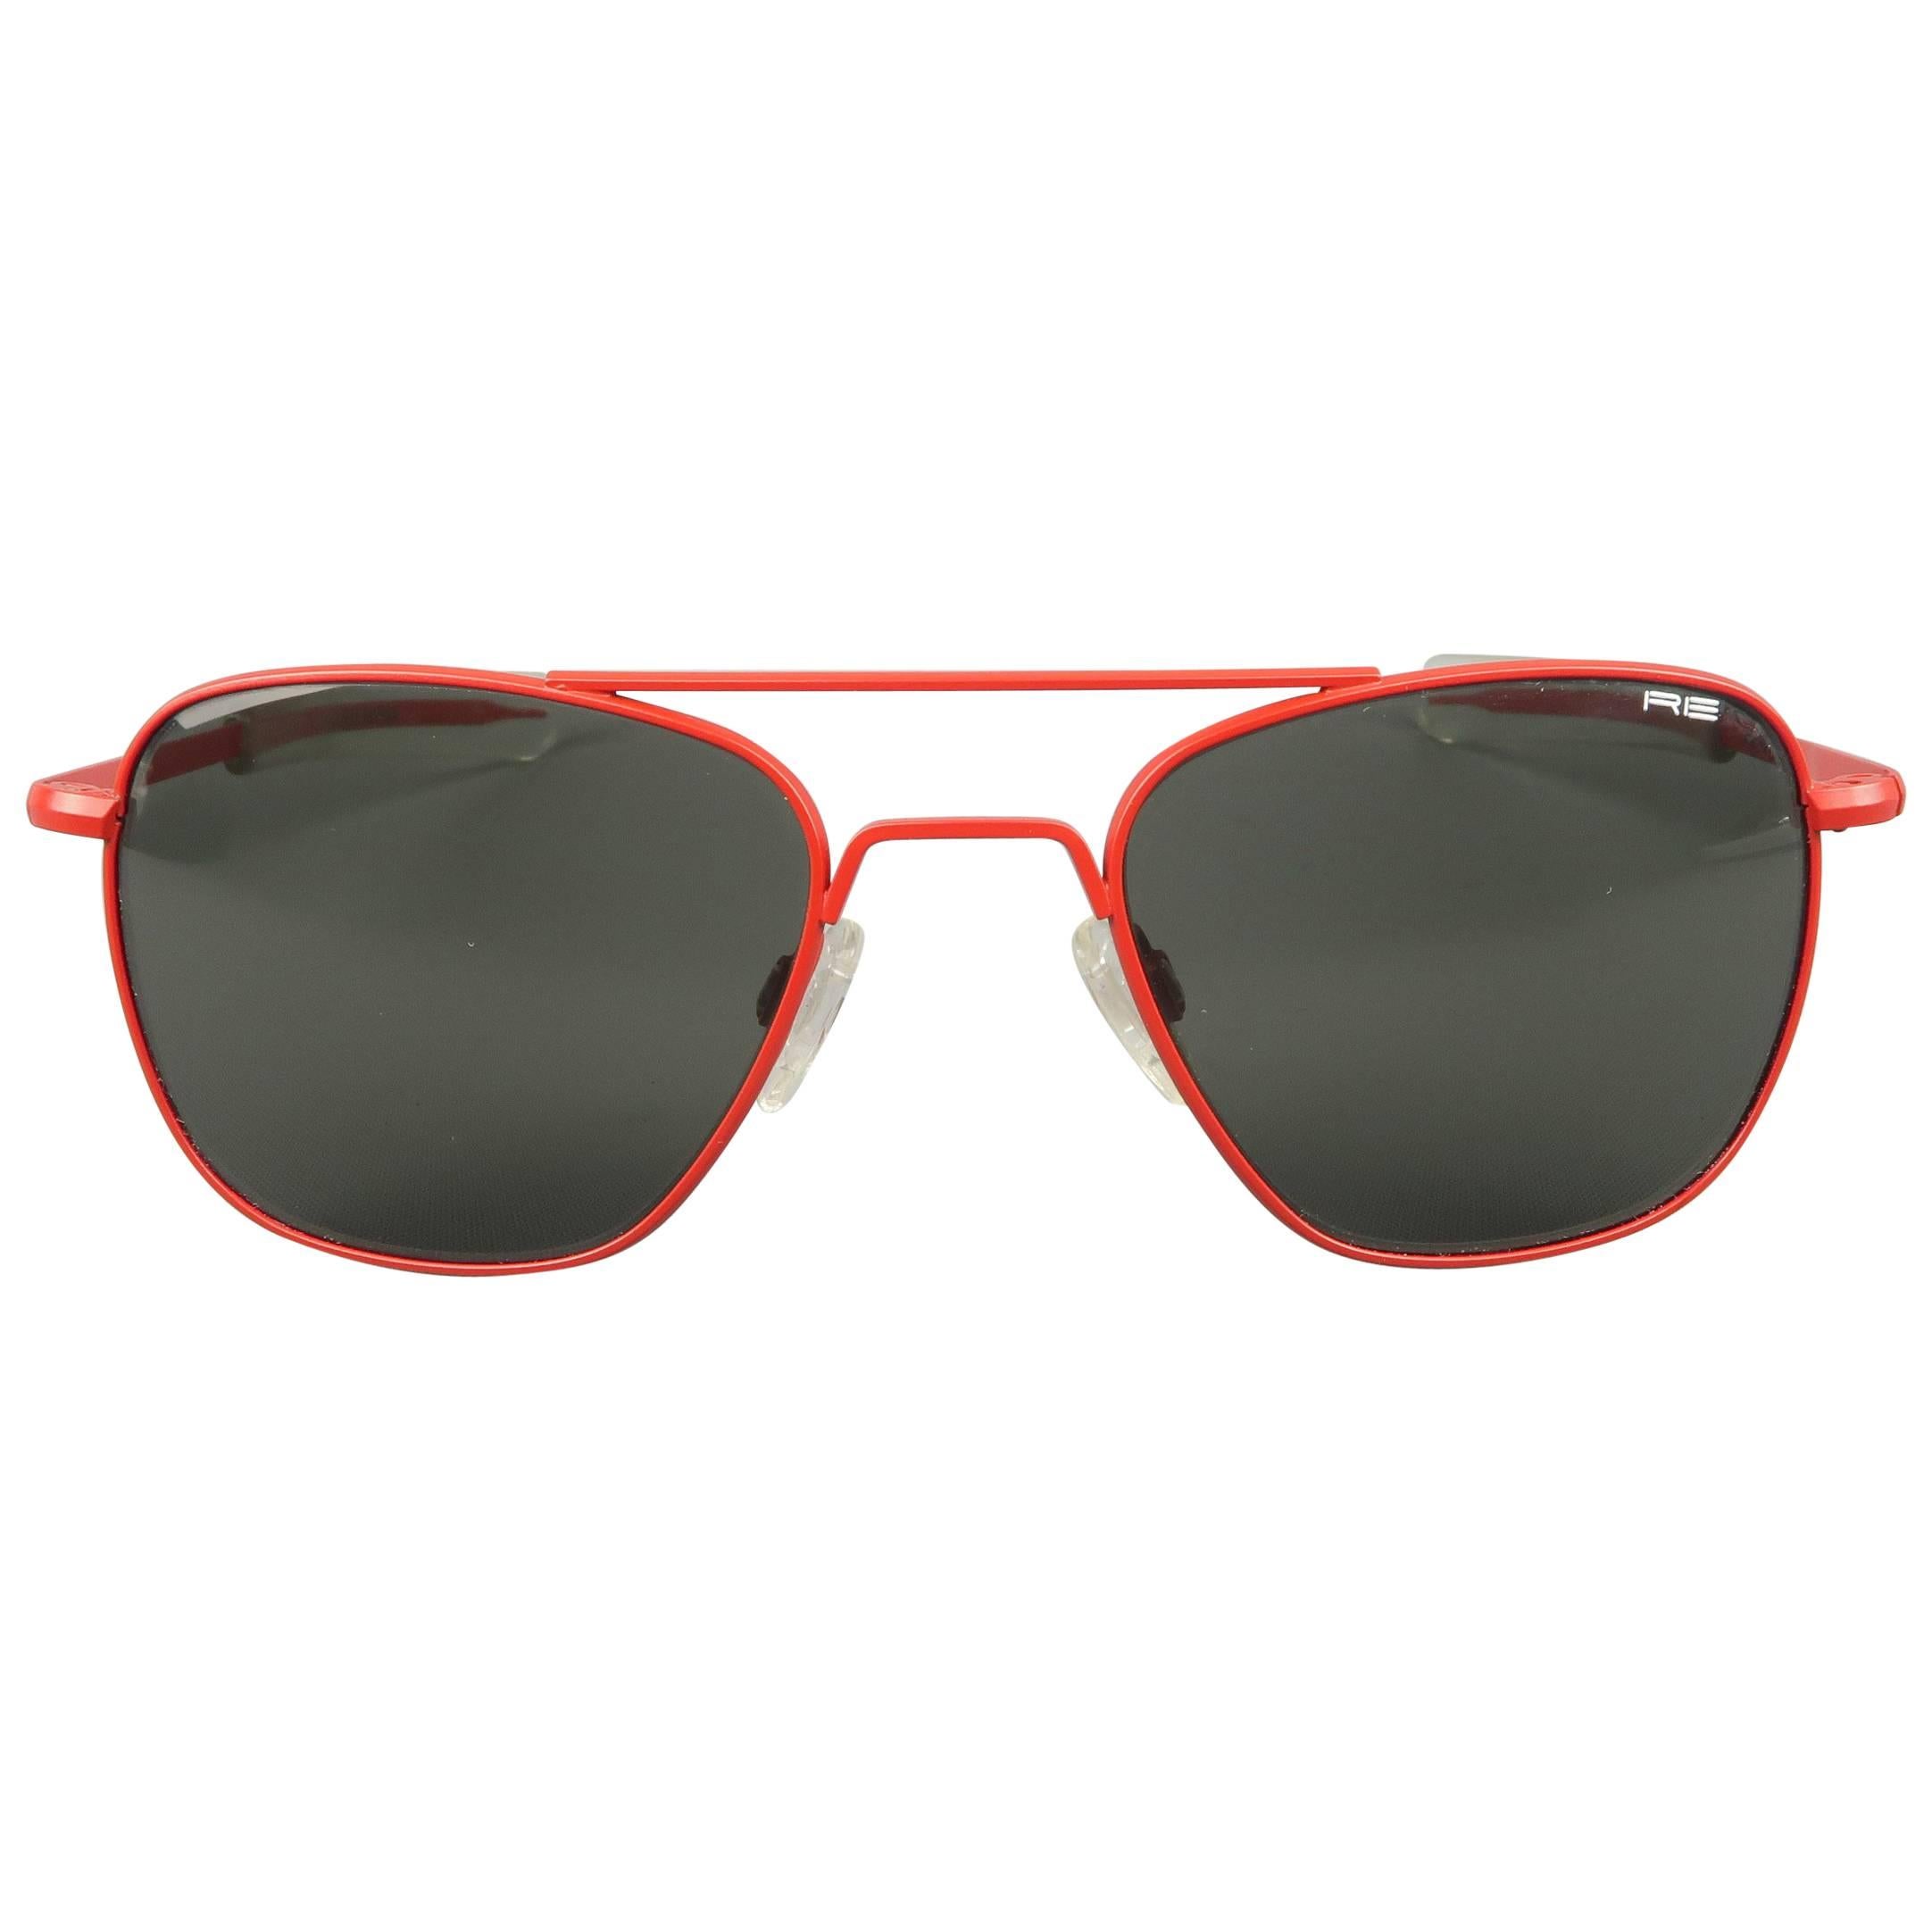 MICHAEL BASTIAN x Randolph Engineering Red Metal Aviator Sunglasses